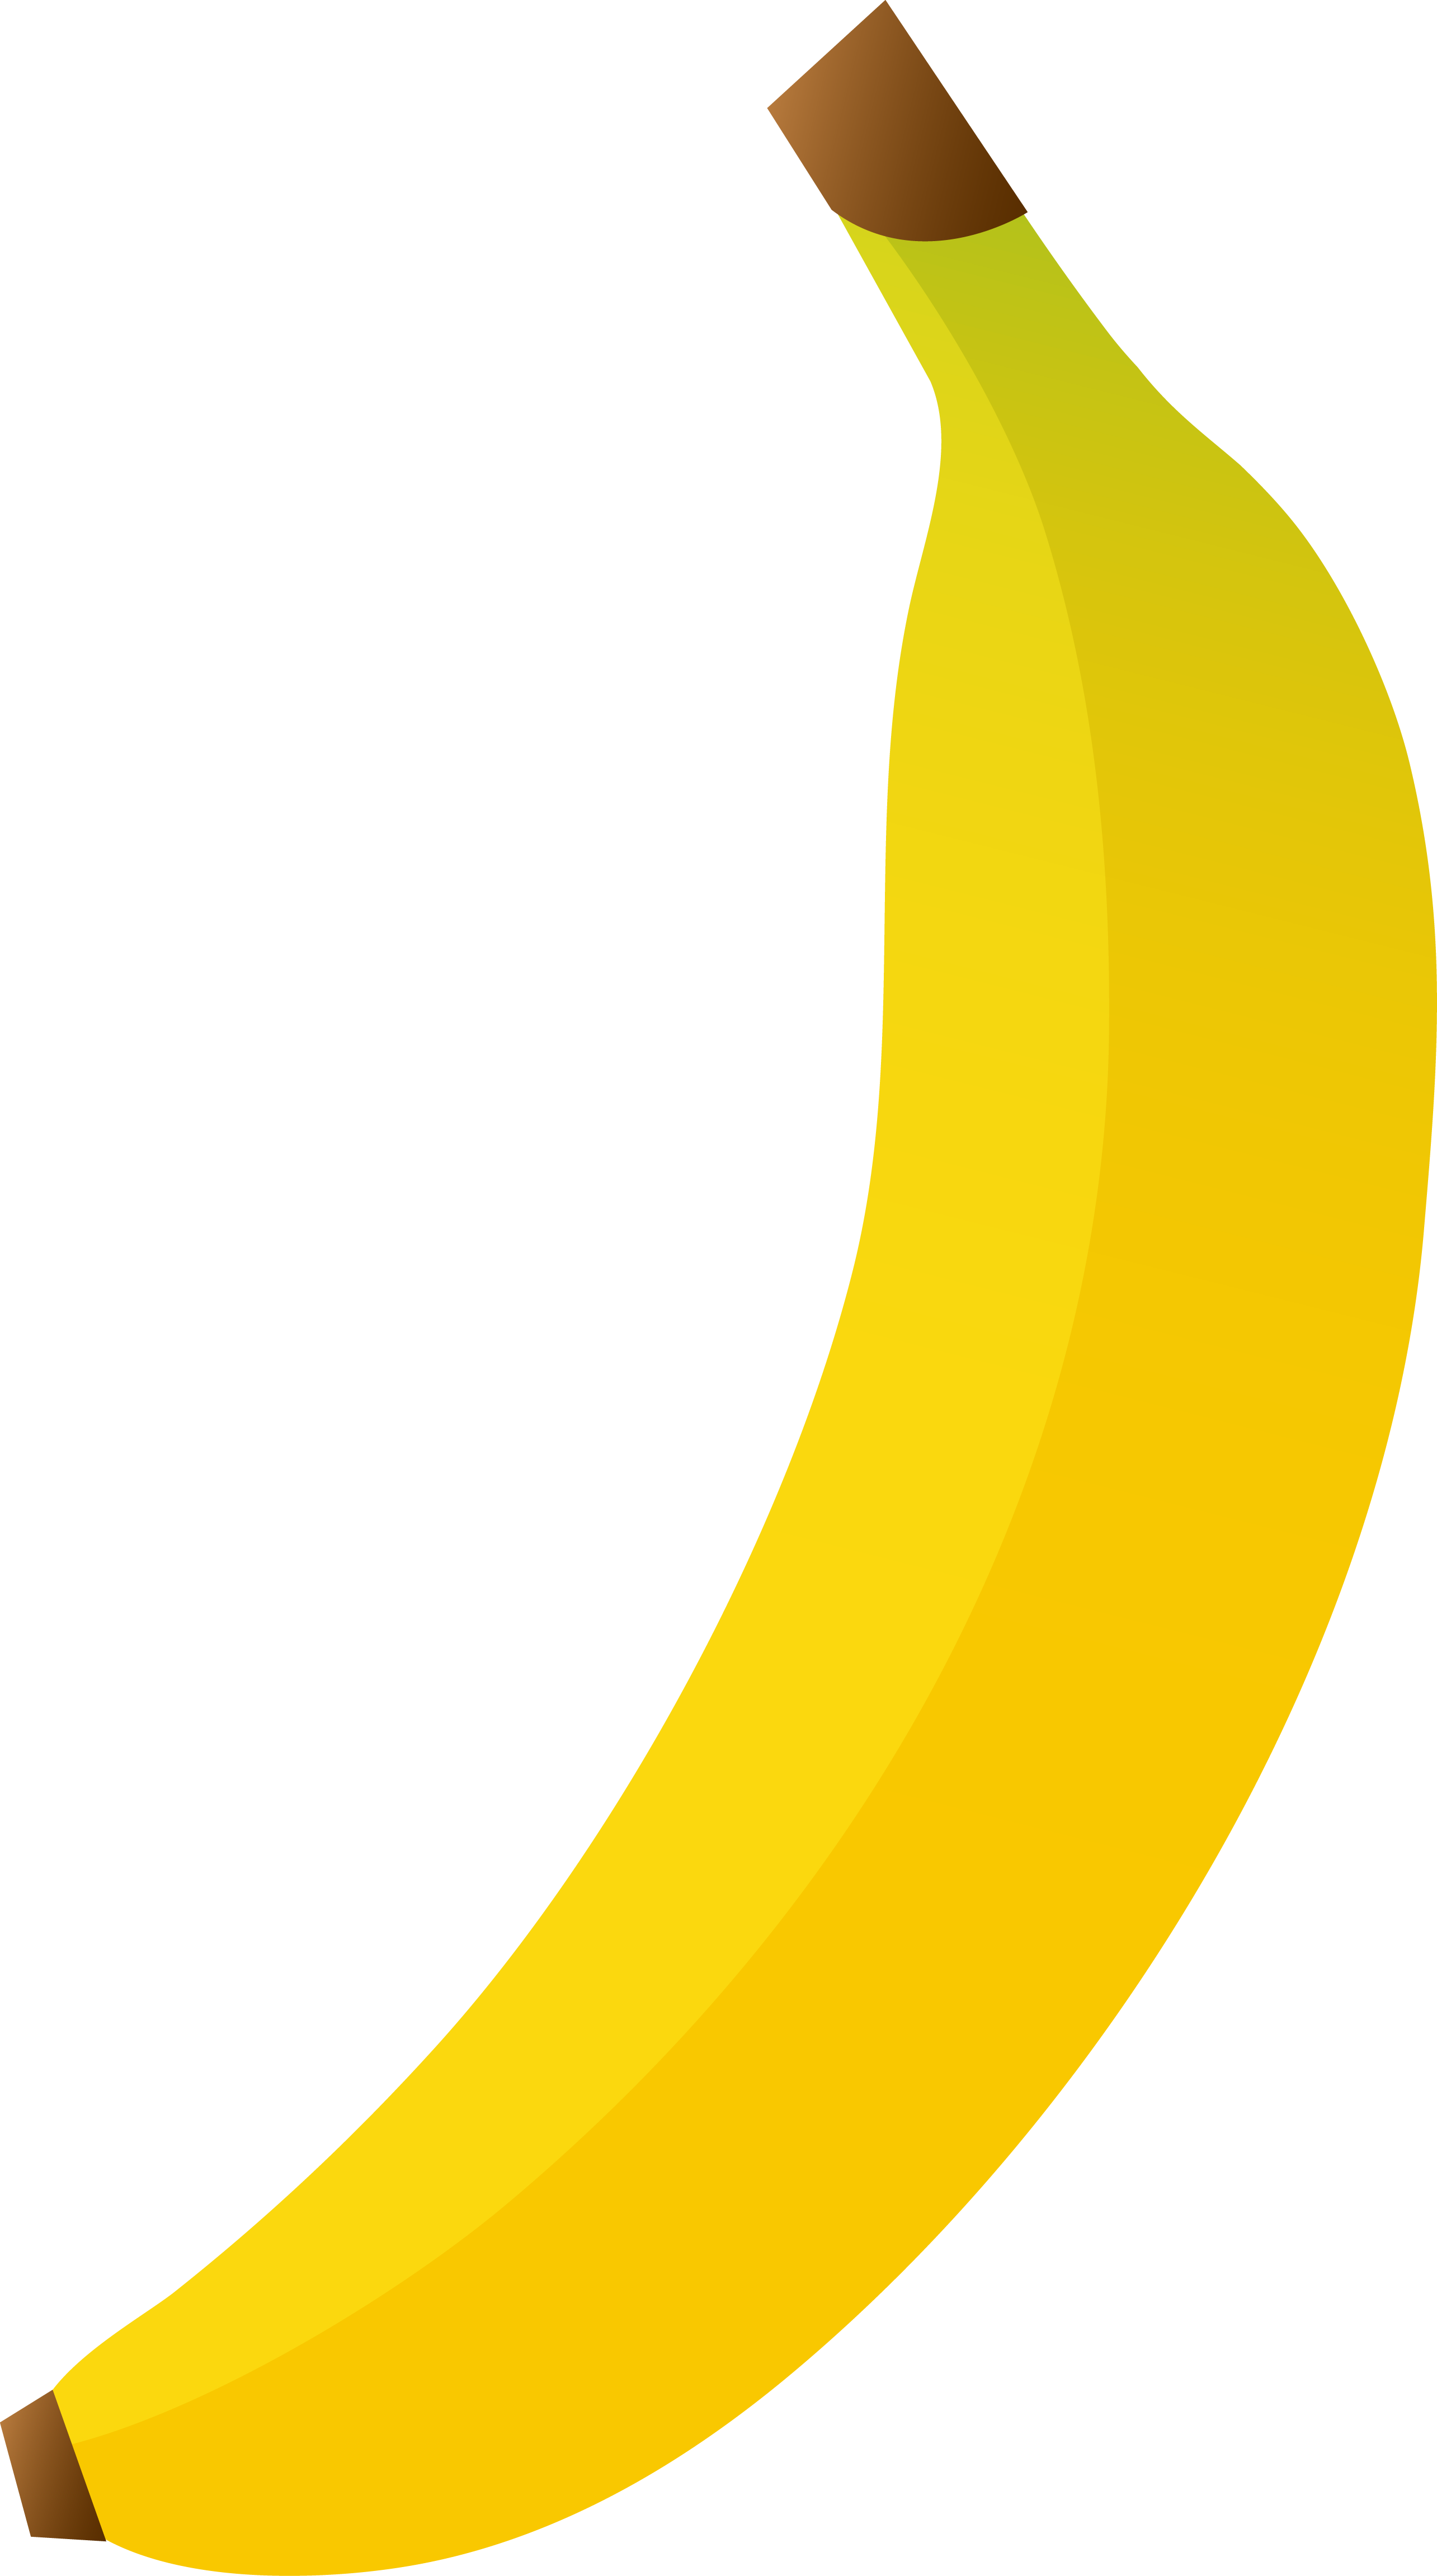 Clip Art Cartoon Illustration Of Banana Fruit Food Object Stock ...